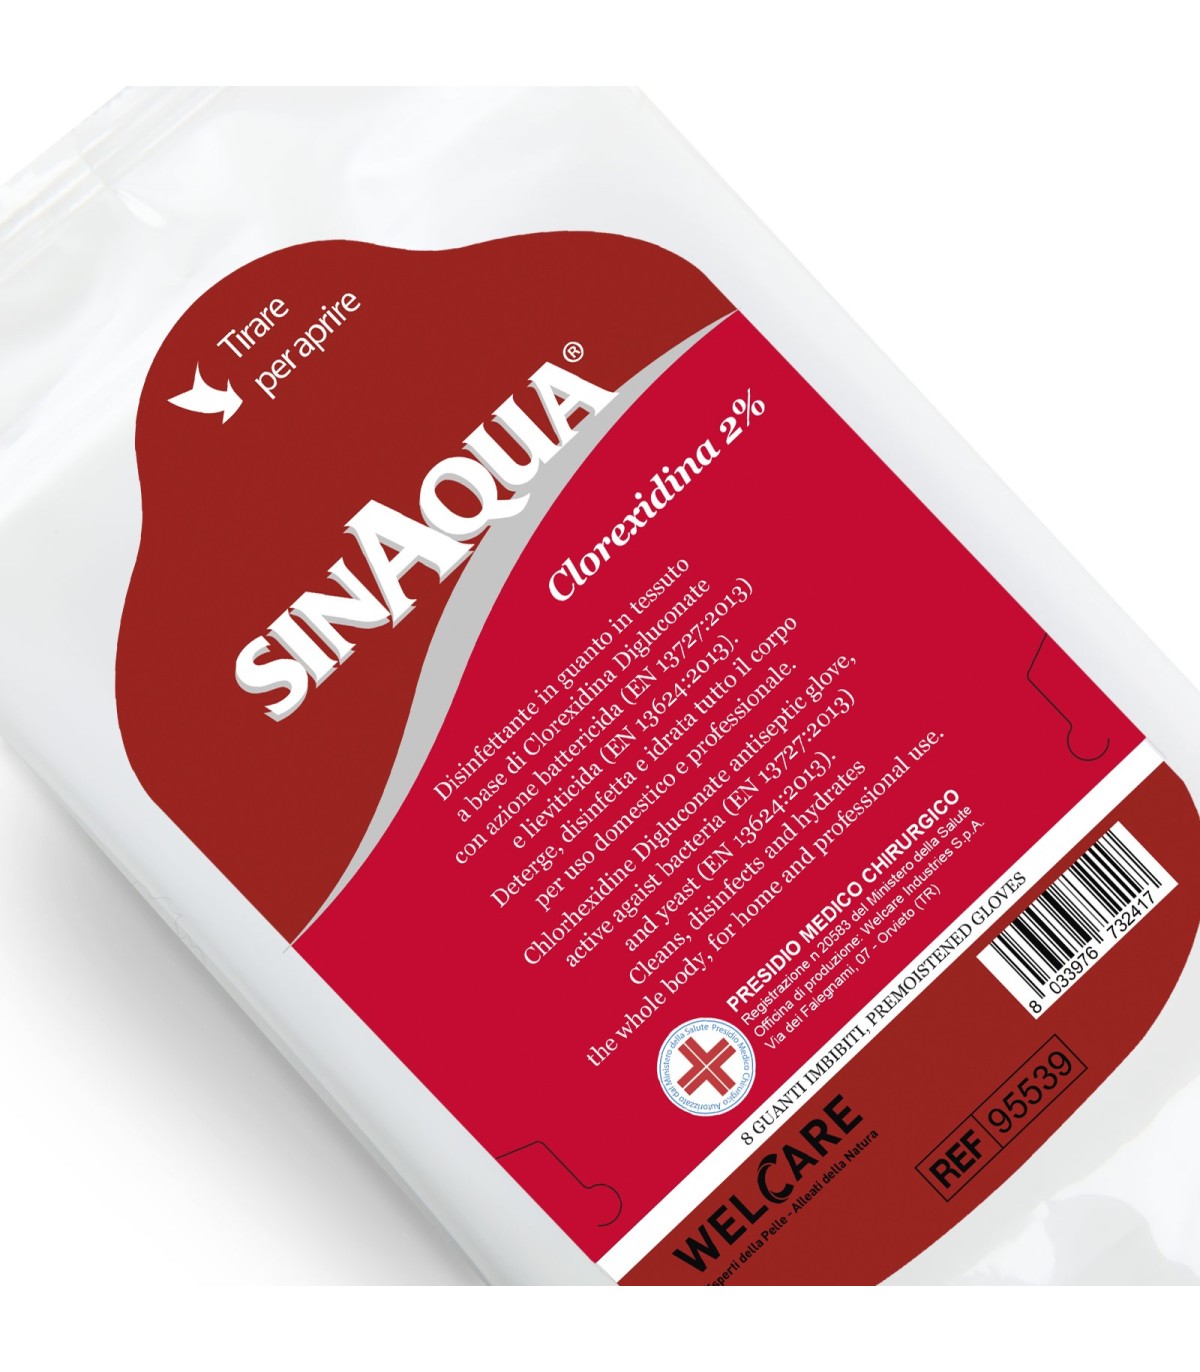 Sinaqua® 2% Chlorhexidina Handschuh